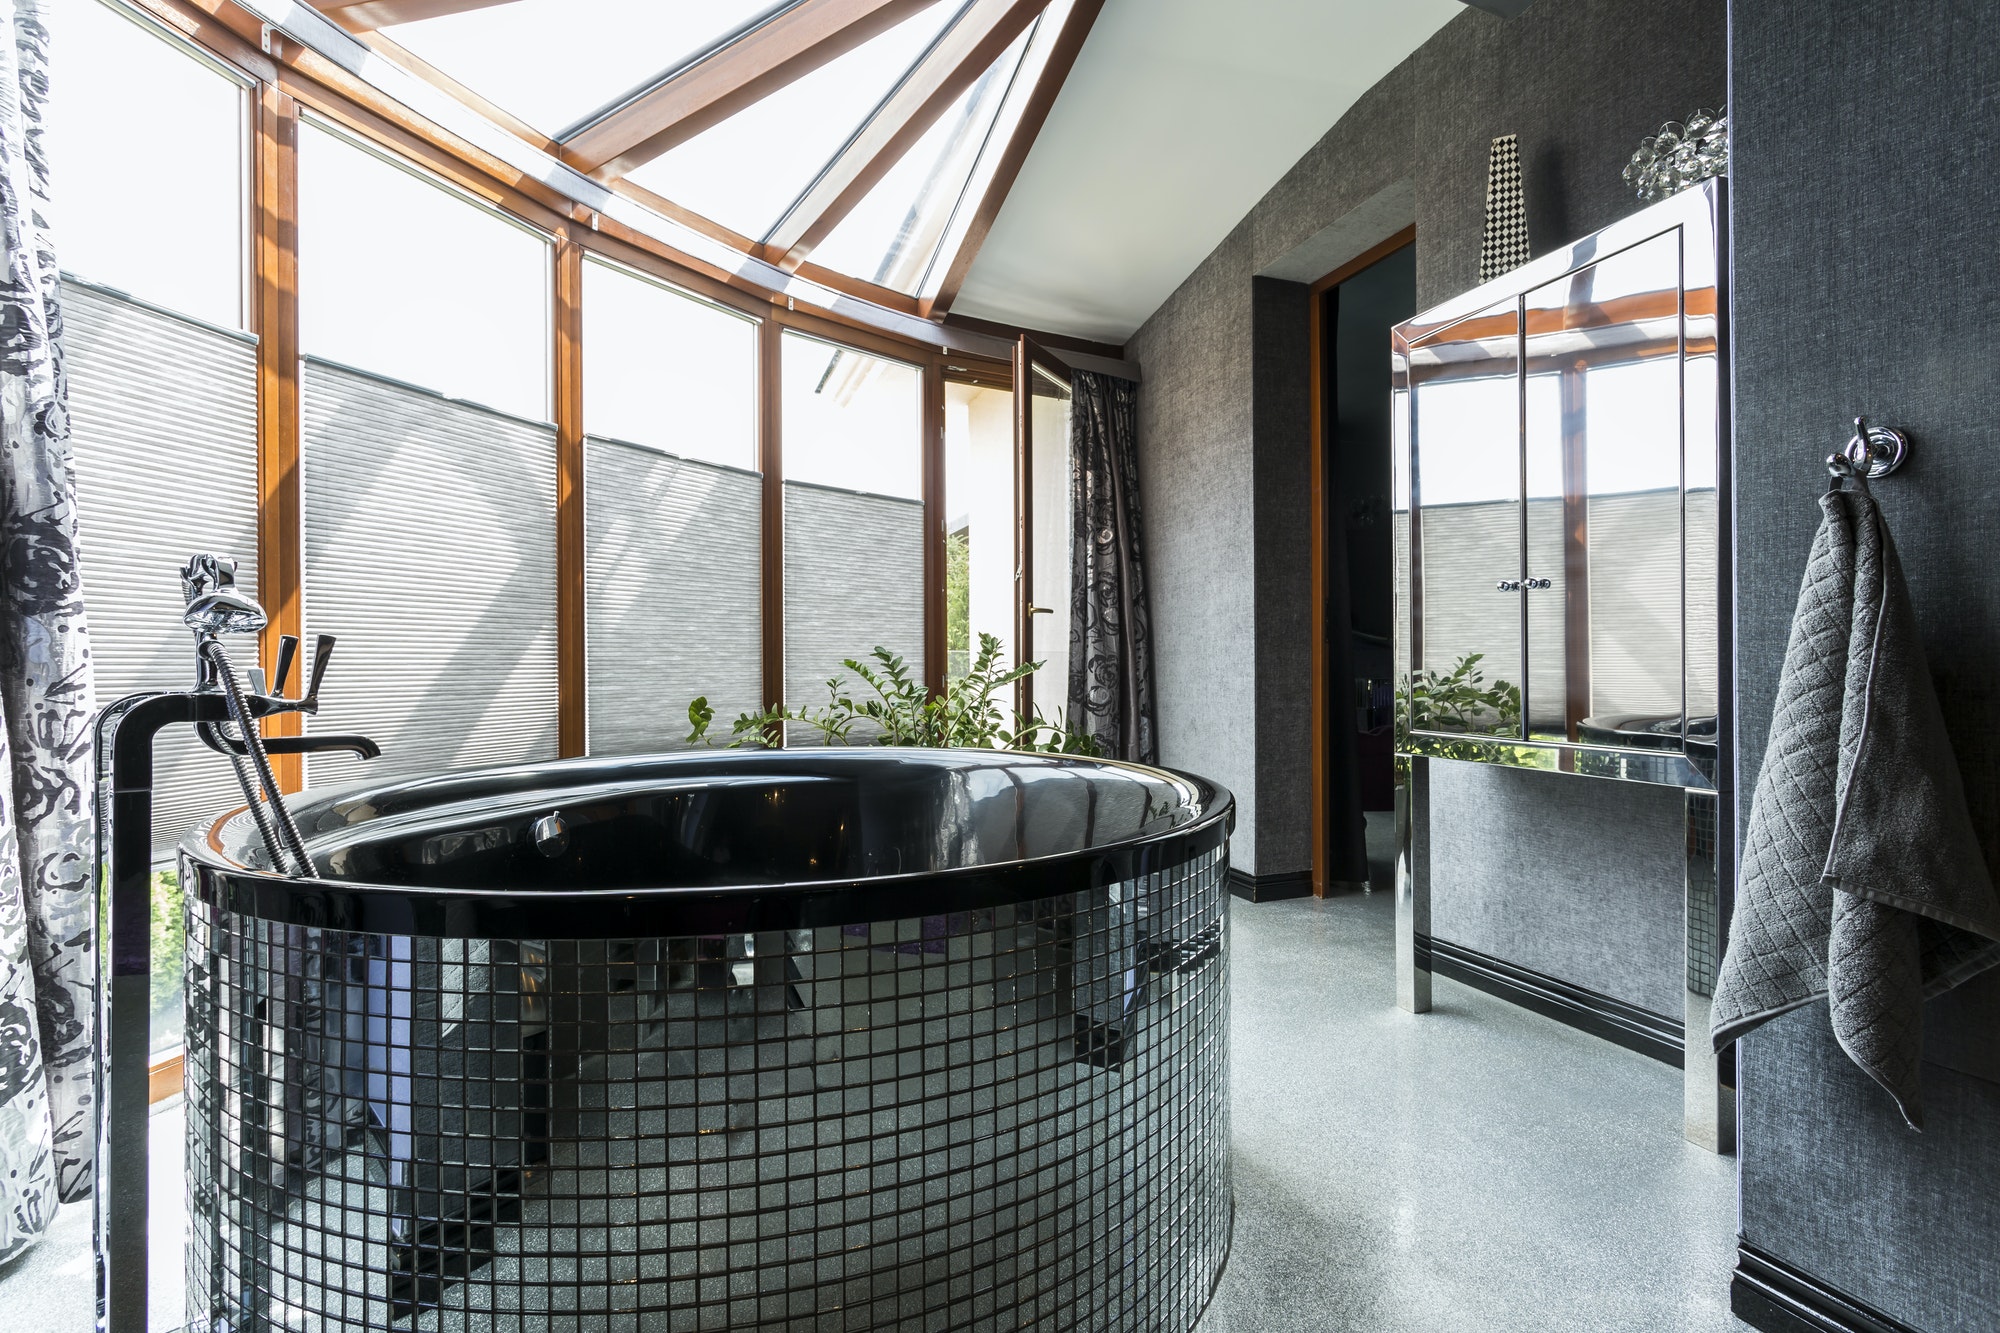 Luxurious bathroom with freestanding glossy bathtub